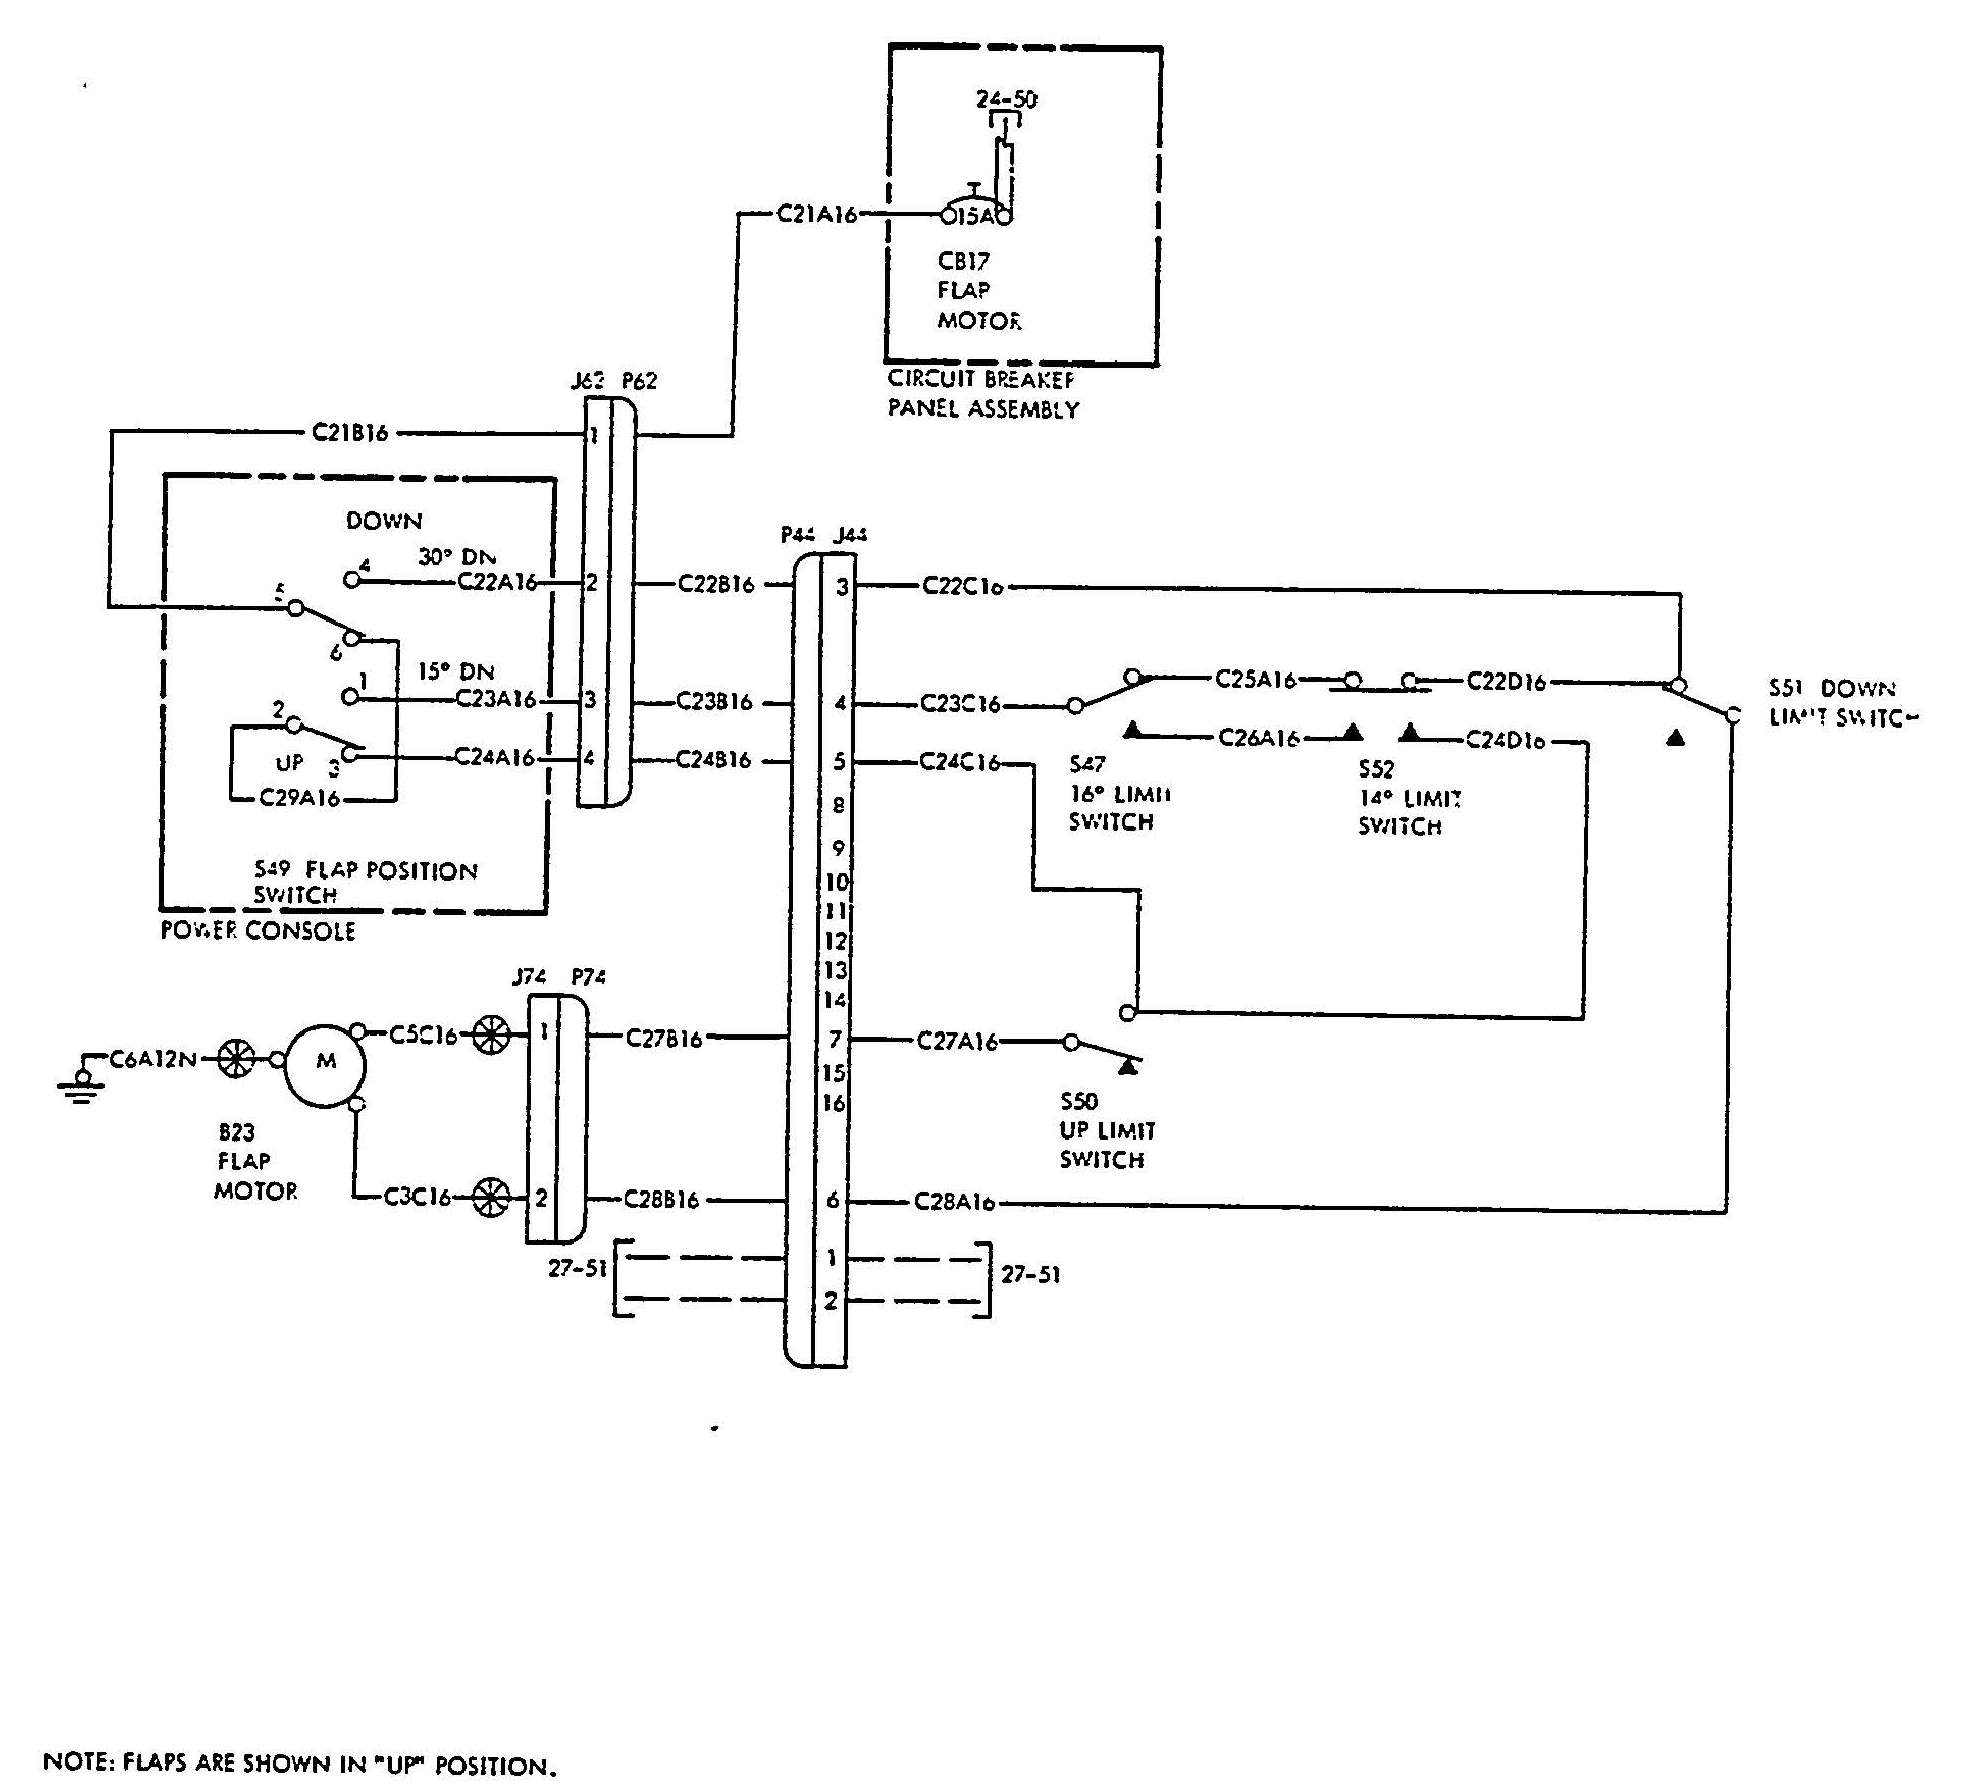 bonanza a36 flap position wiring diagram